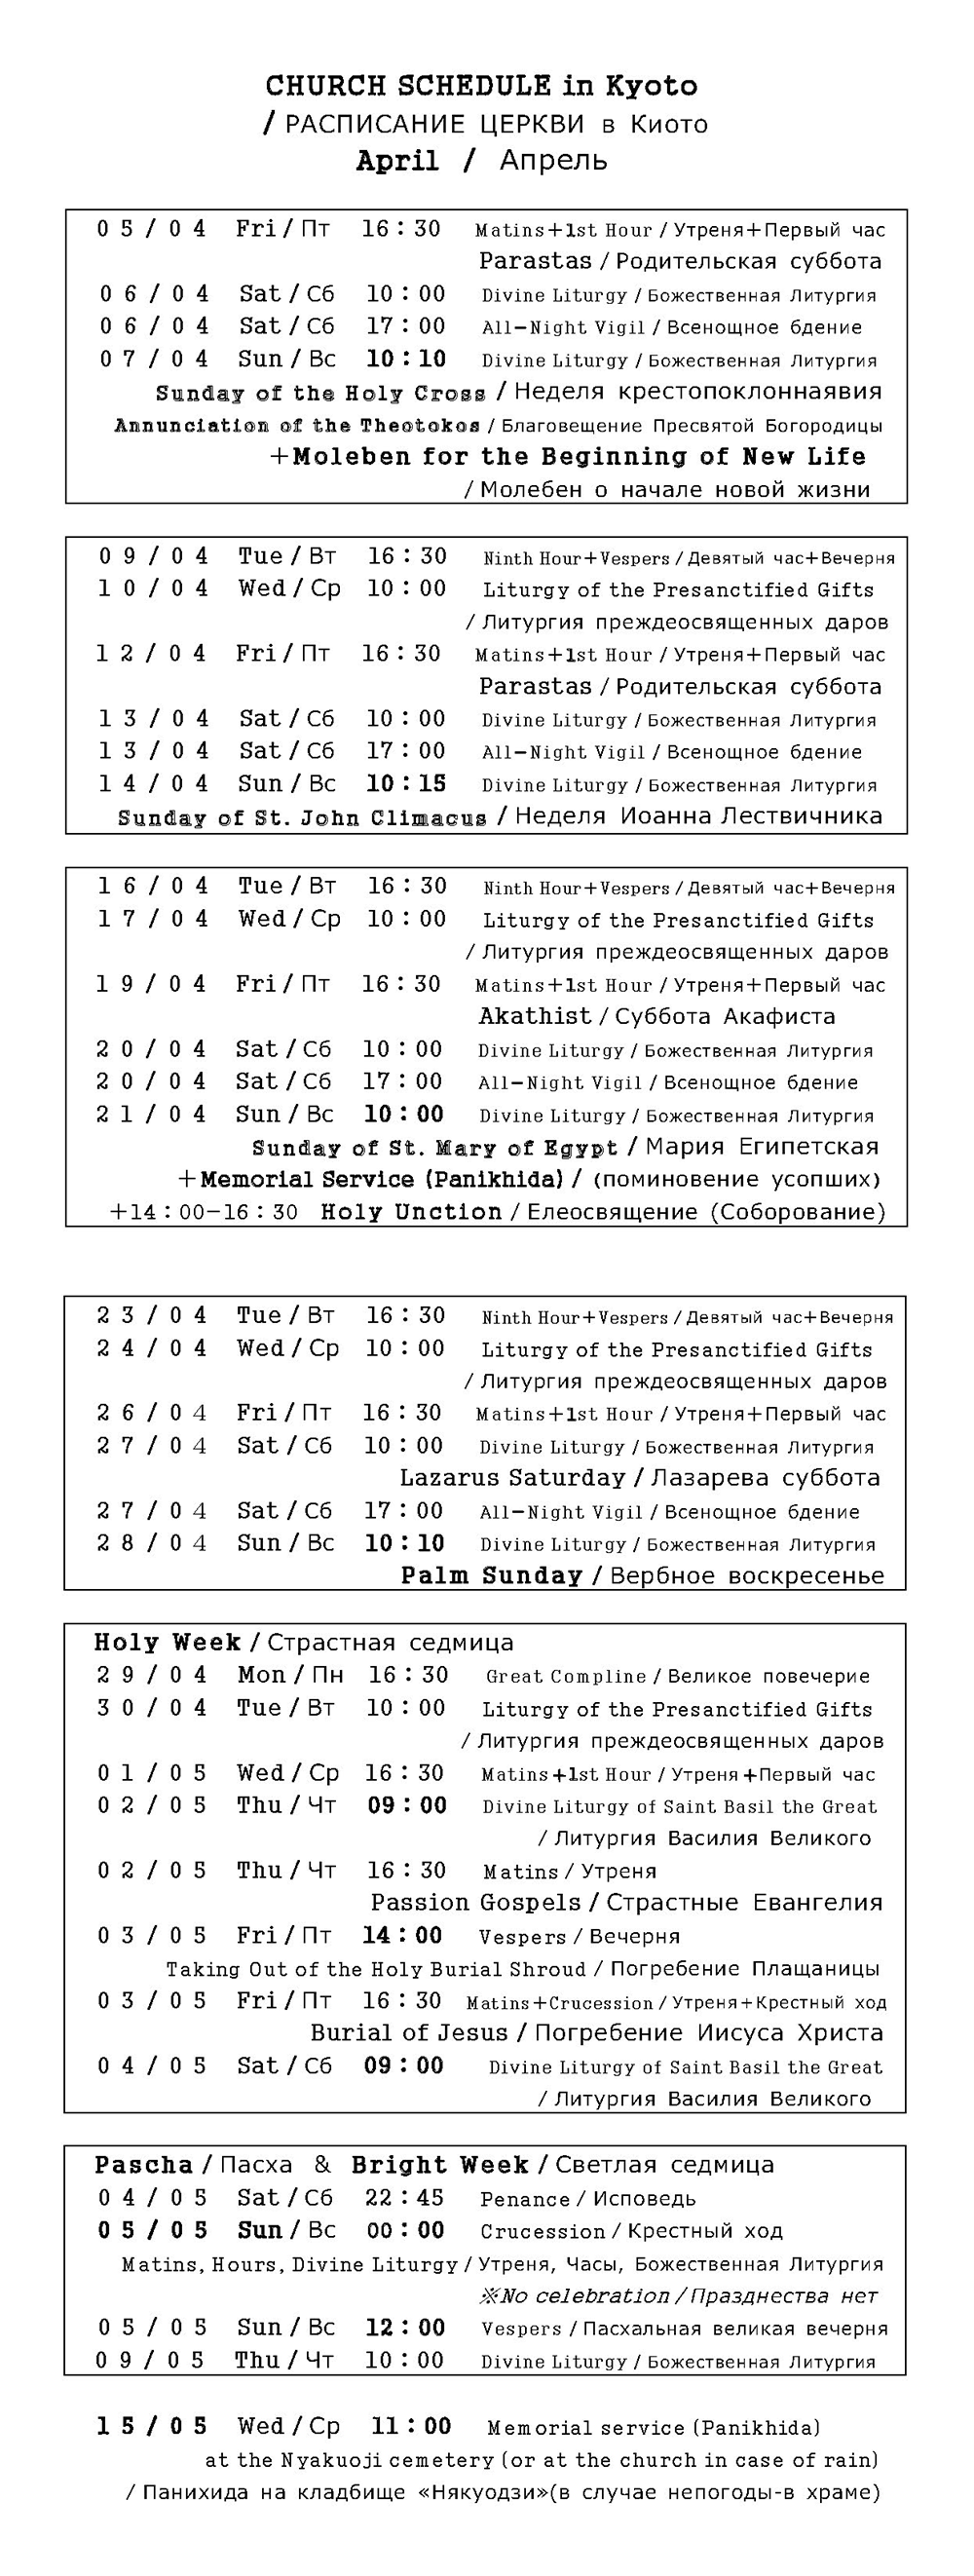 Schedule / Расписание